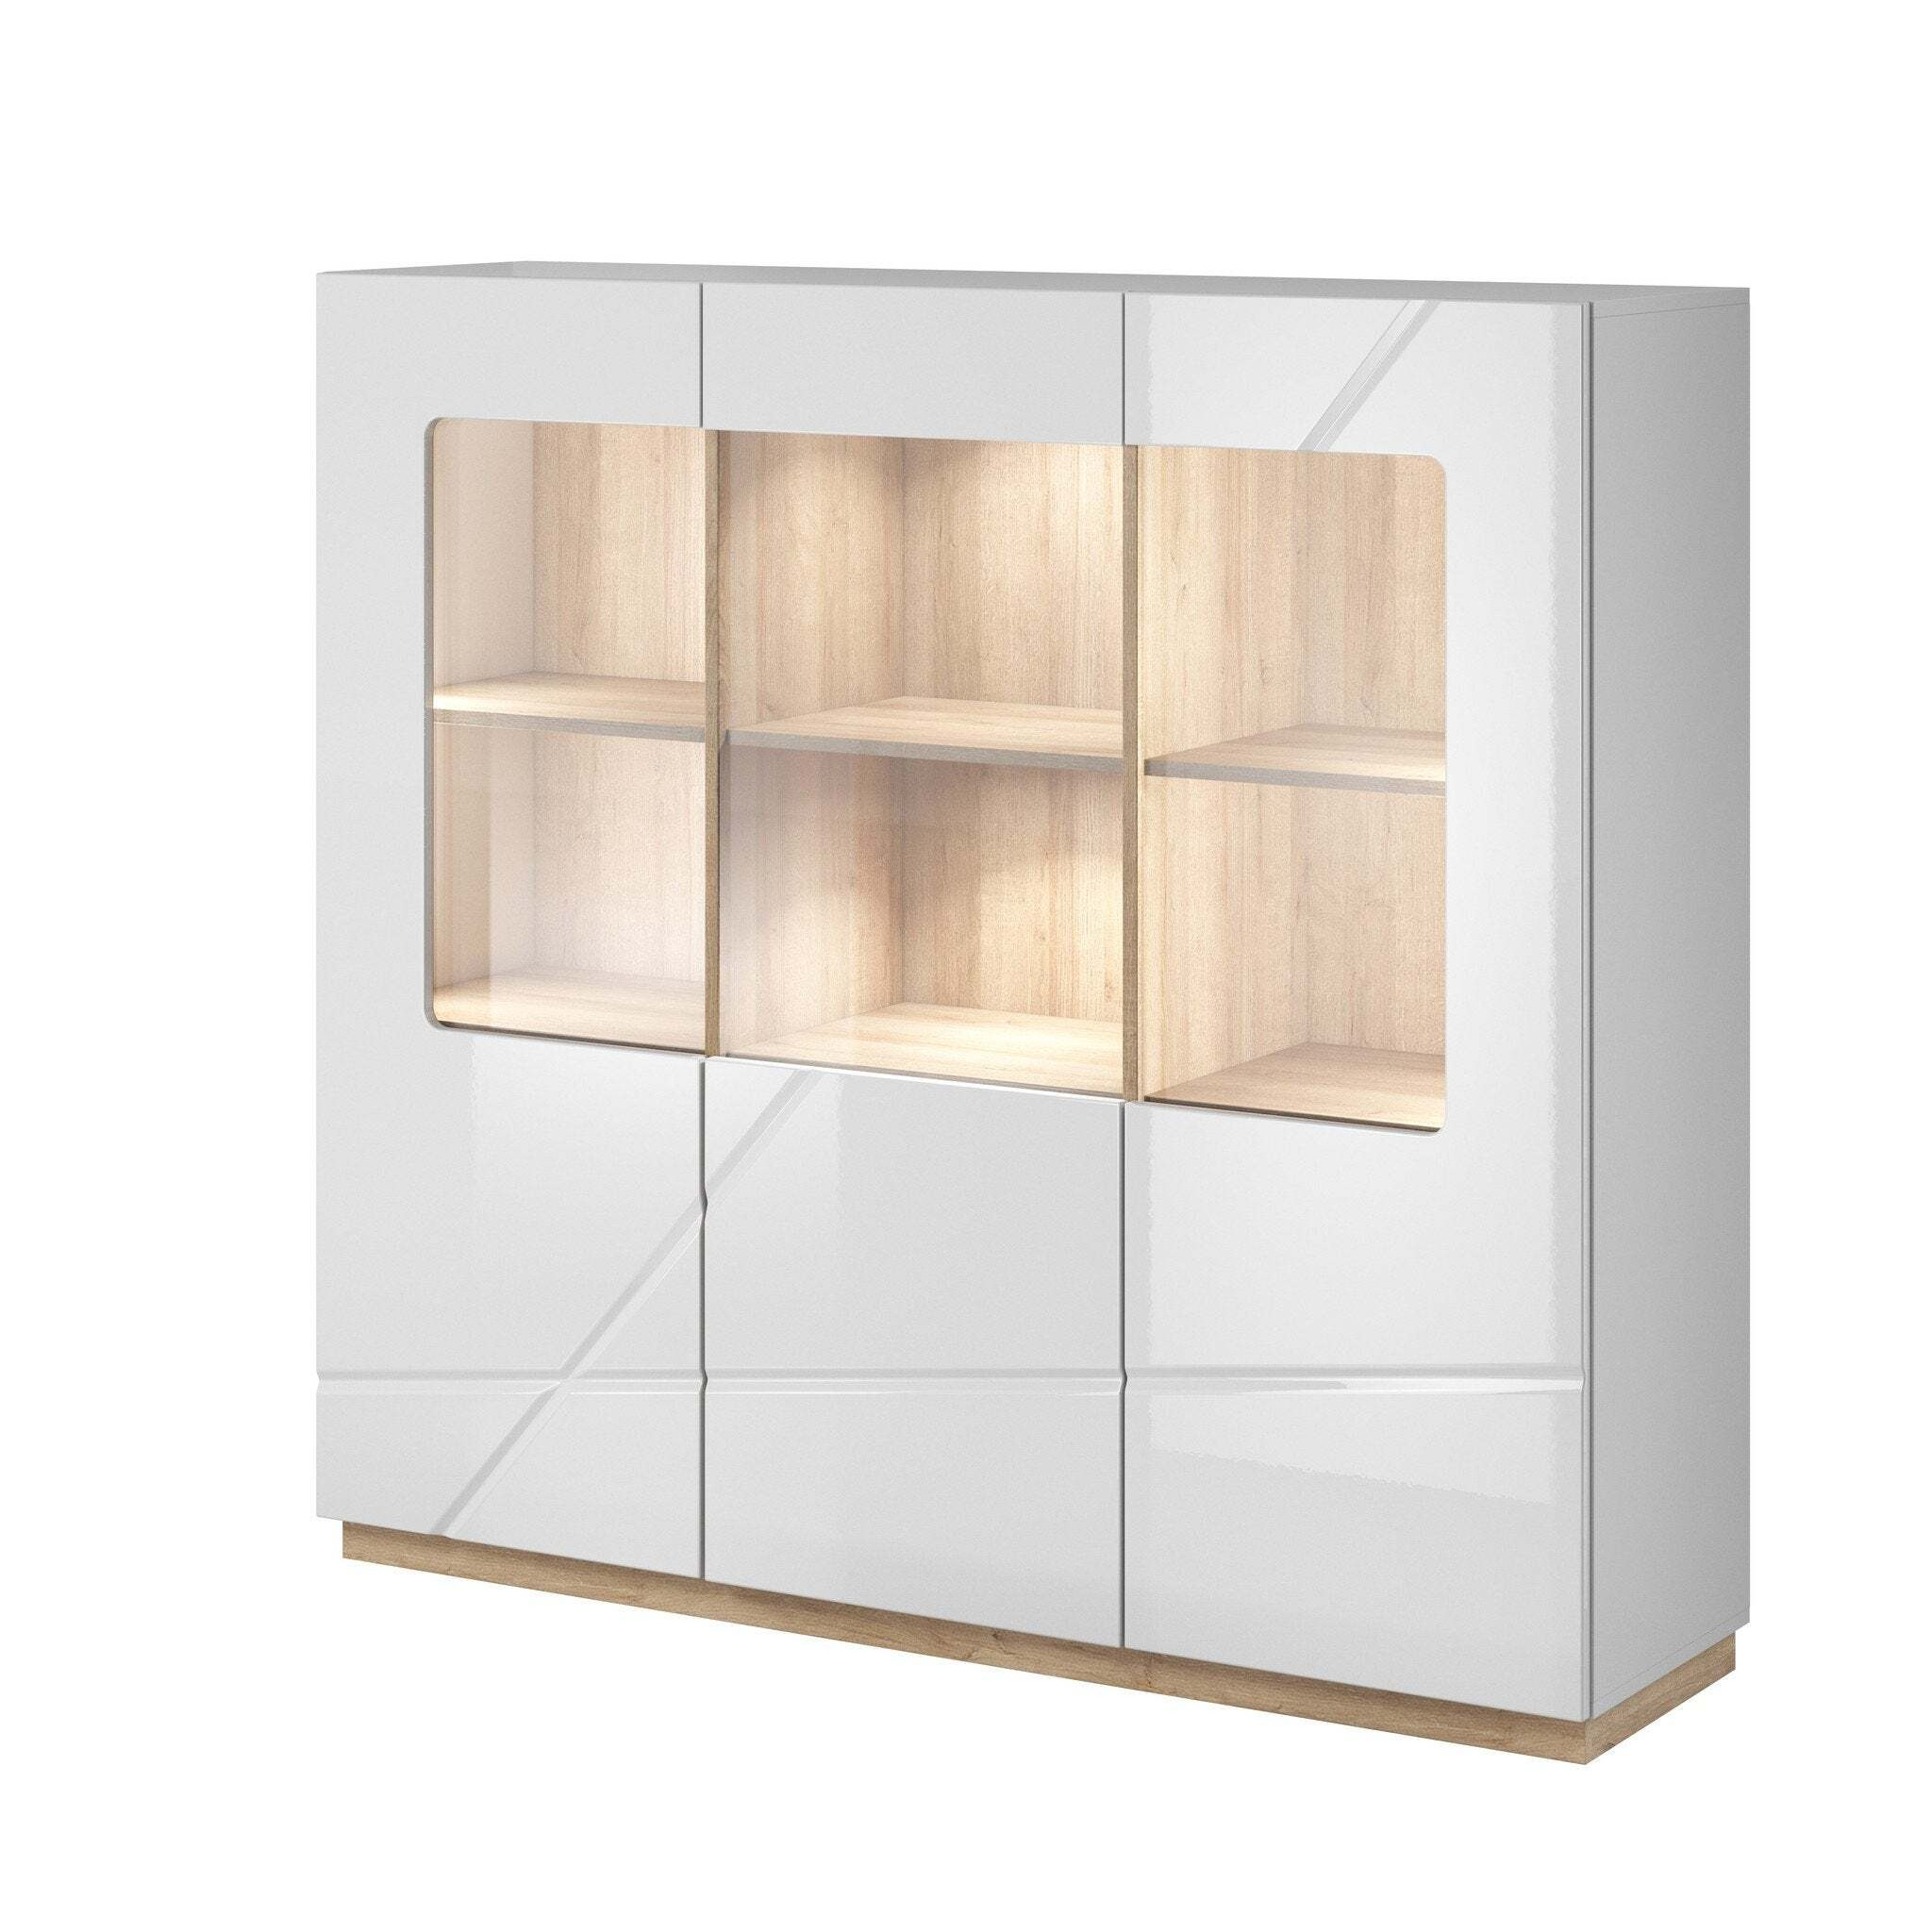 Futura FU-06 Display Cabinet 150cm - White Gloss 150cm - image 1